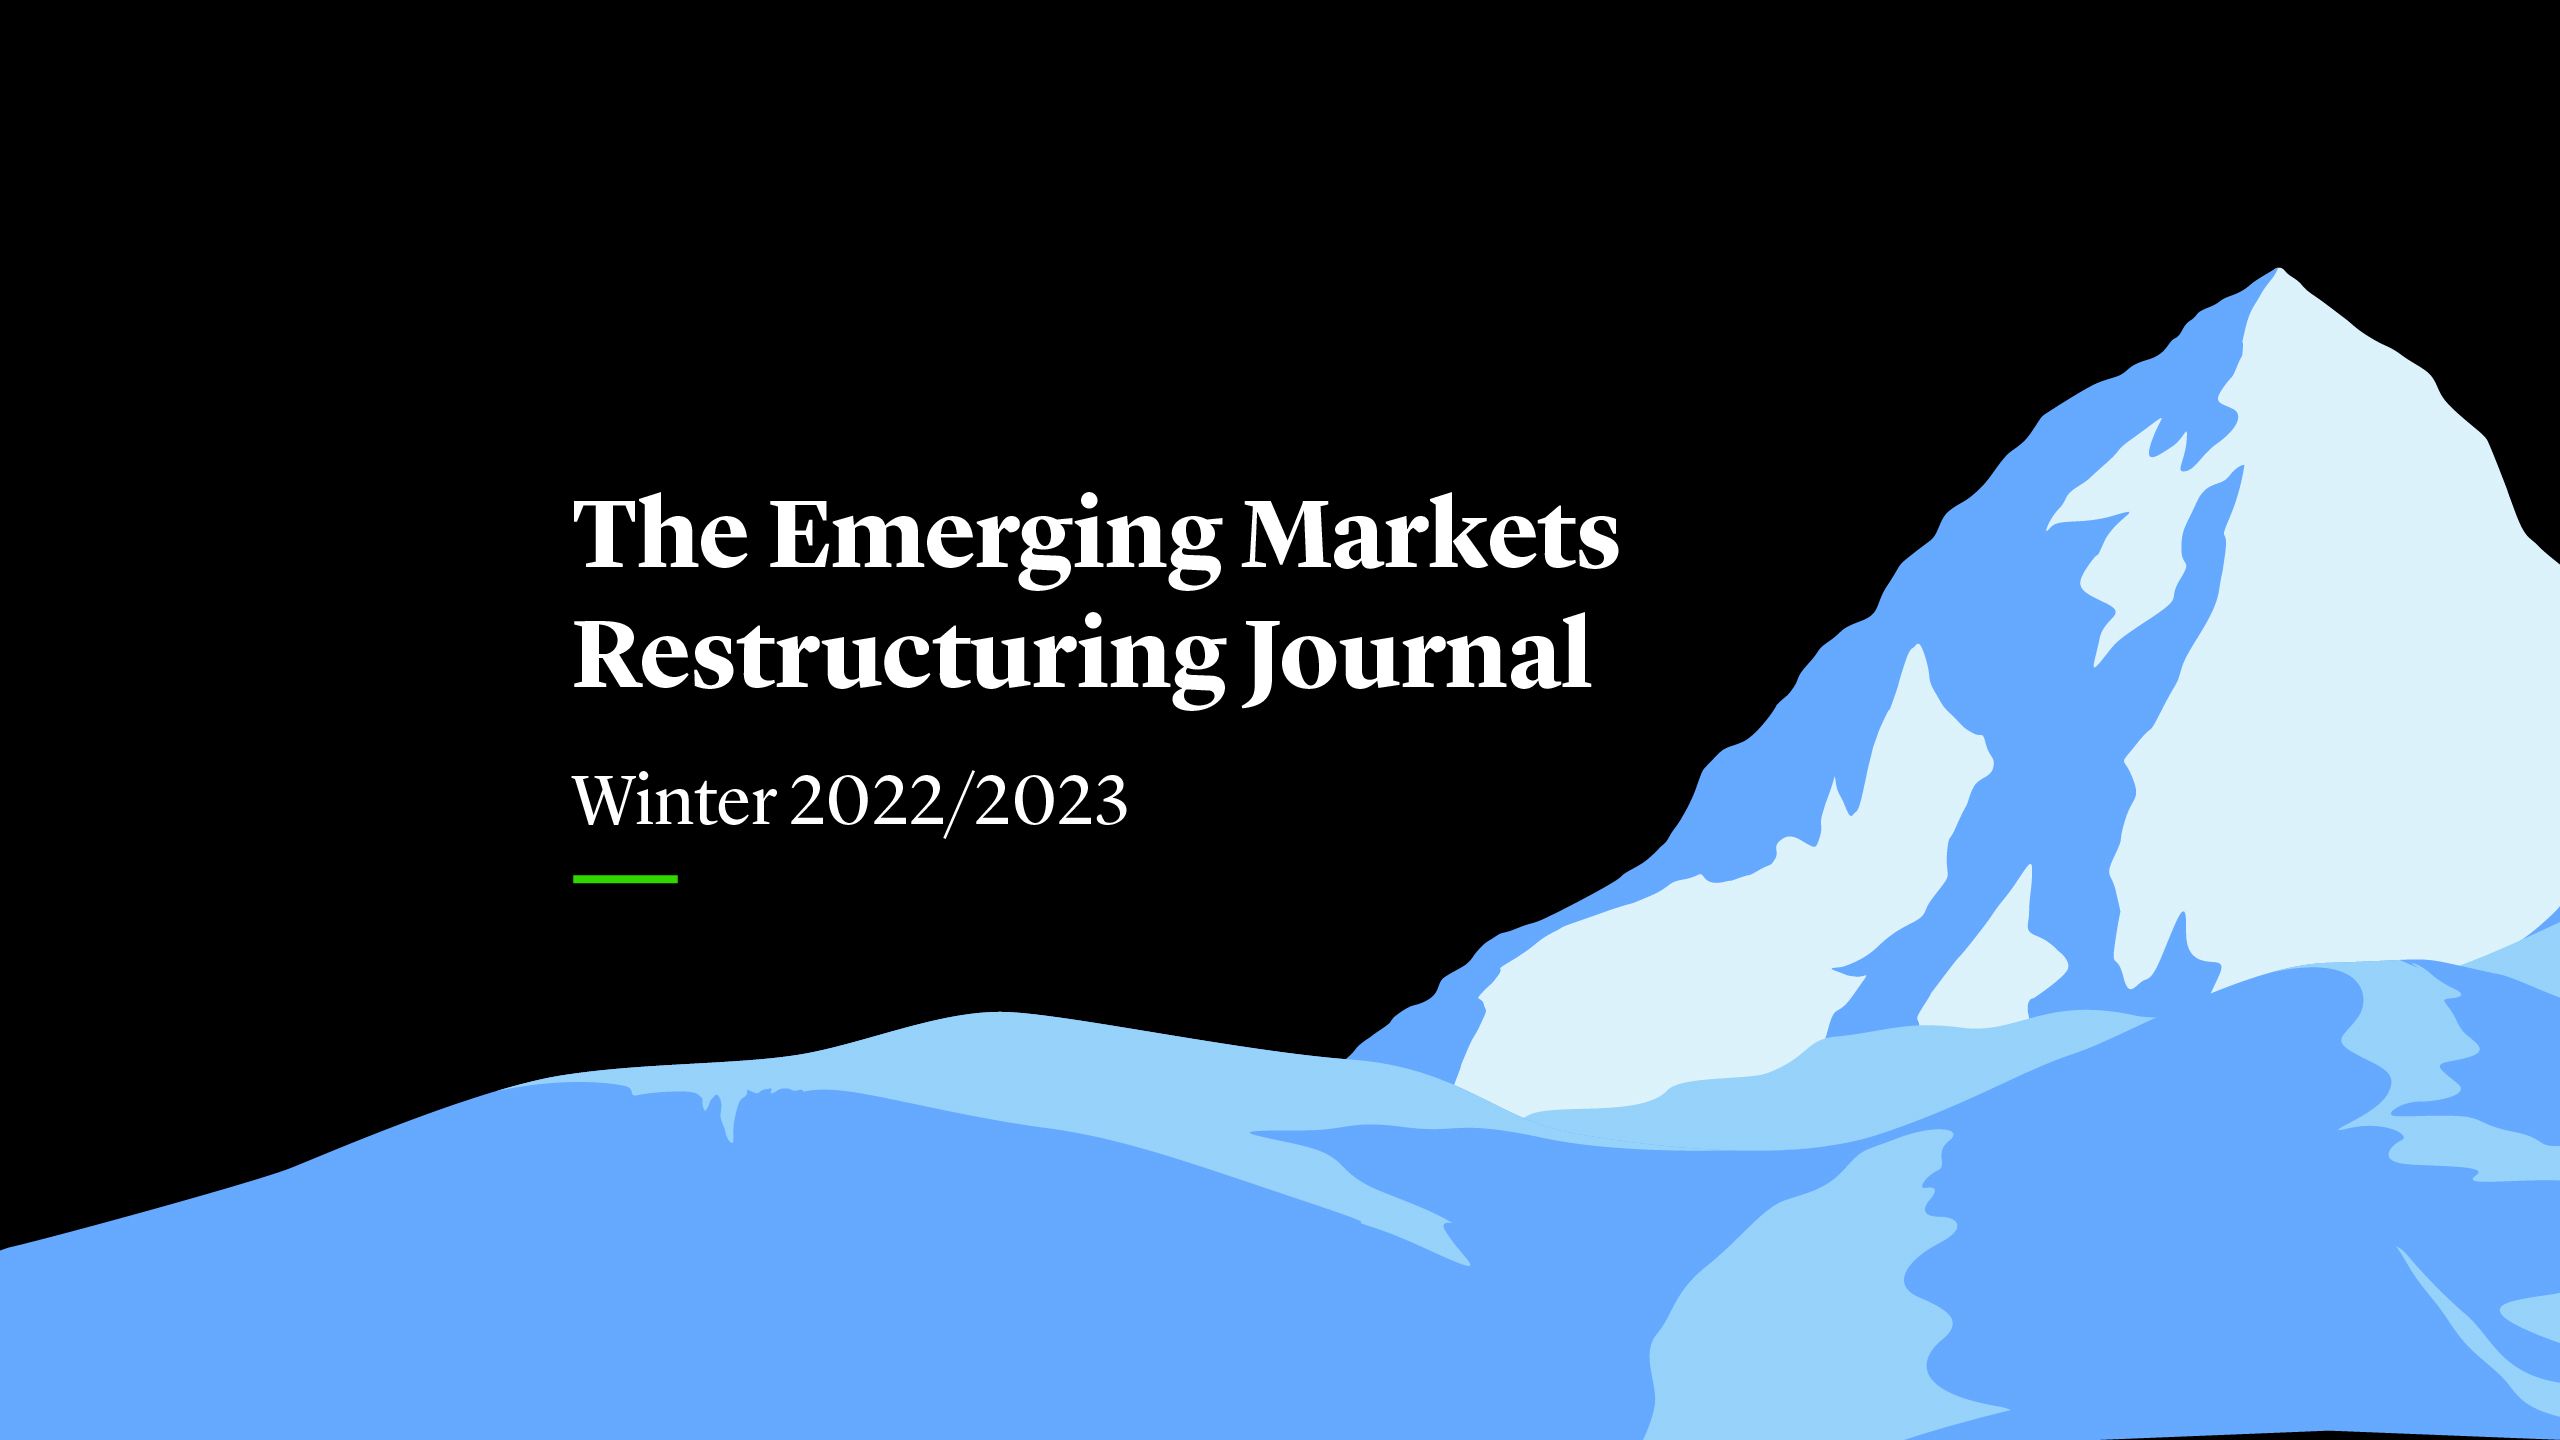 The Emerging Markets Restructuring Journal Winter 2022